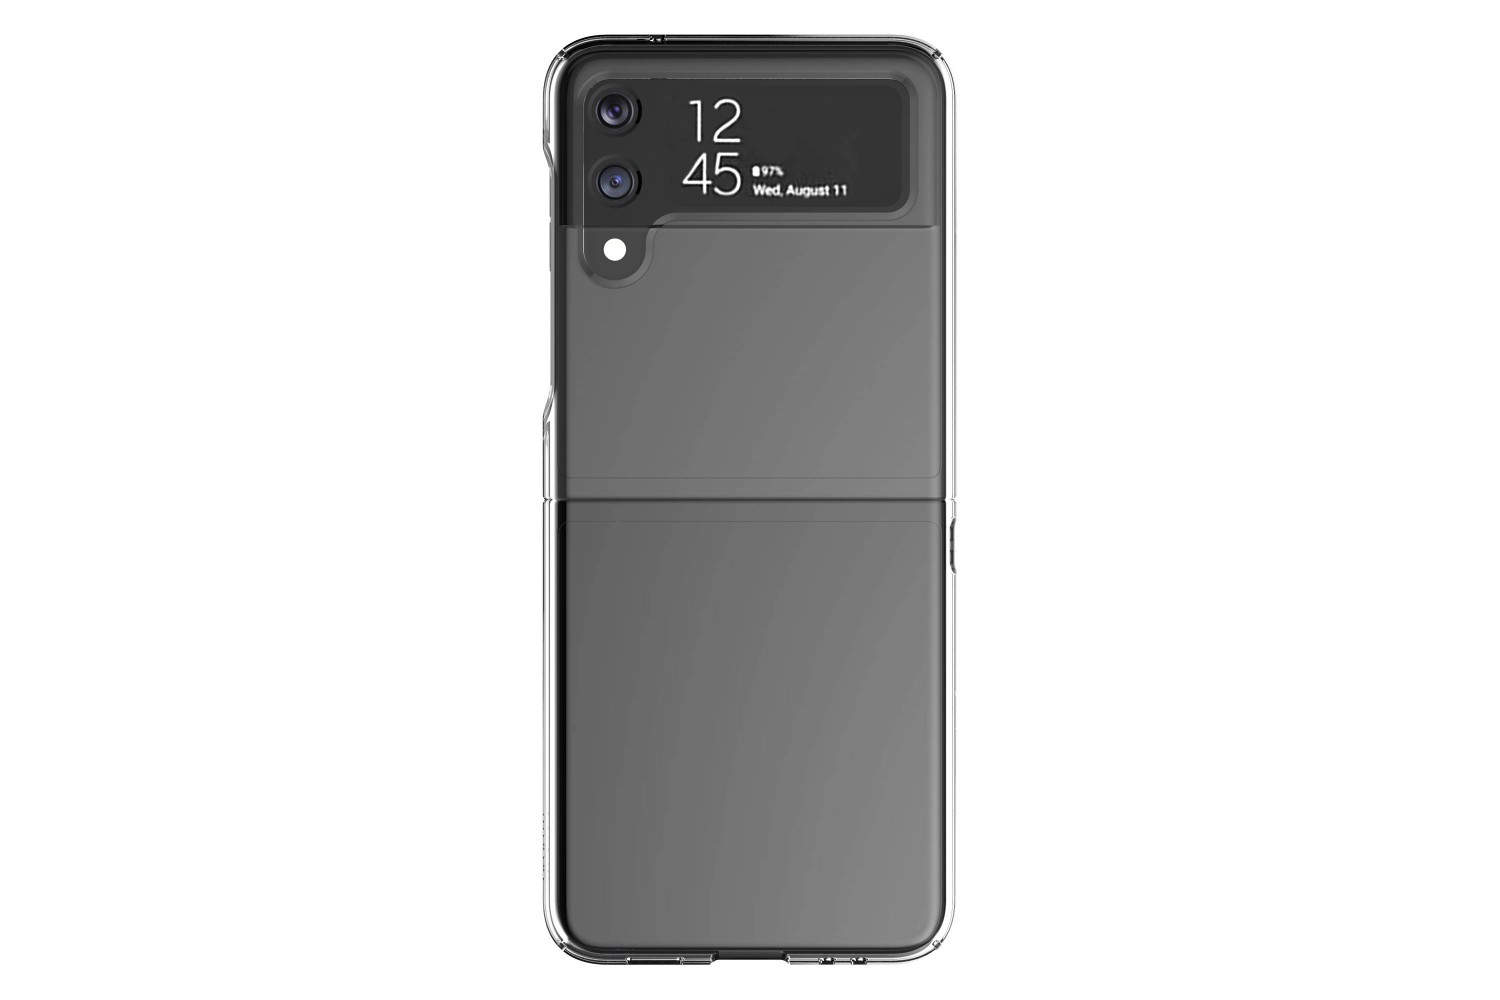 Ochranný kryt Clear Cover GP-FPF711KD pro Samsung Galaxy Z Flip 3, transparentní